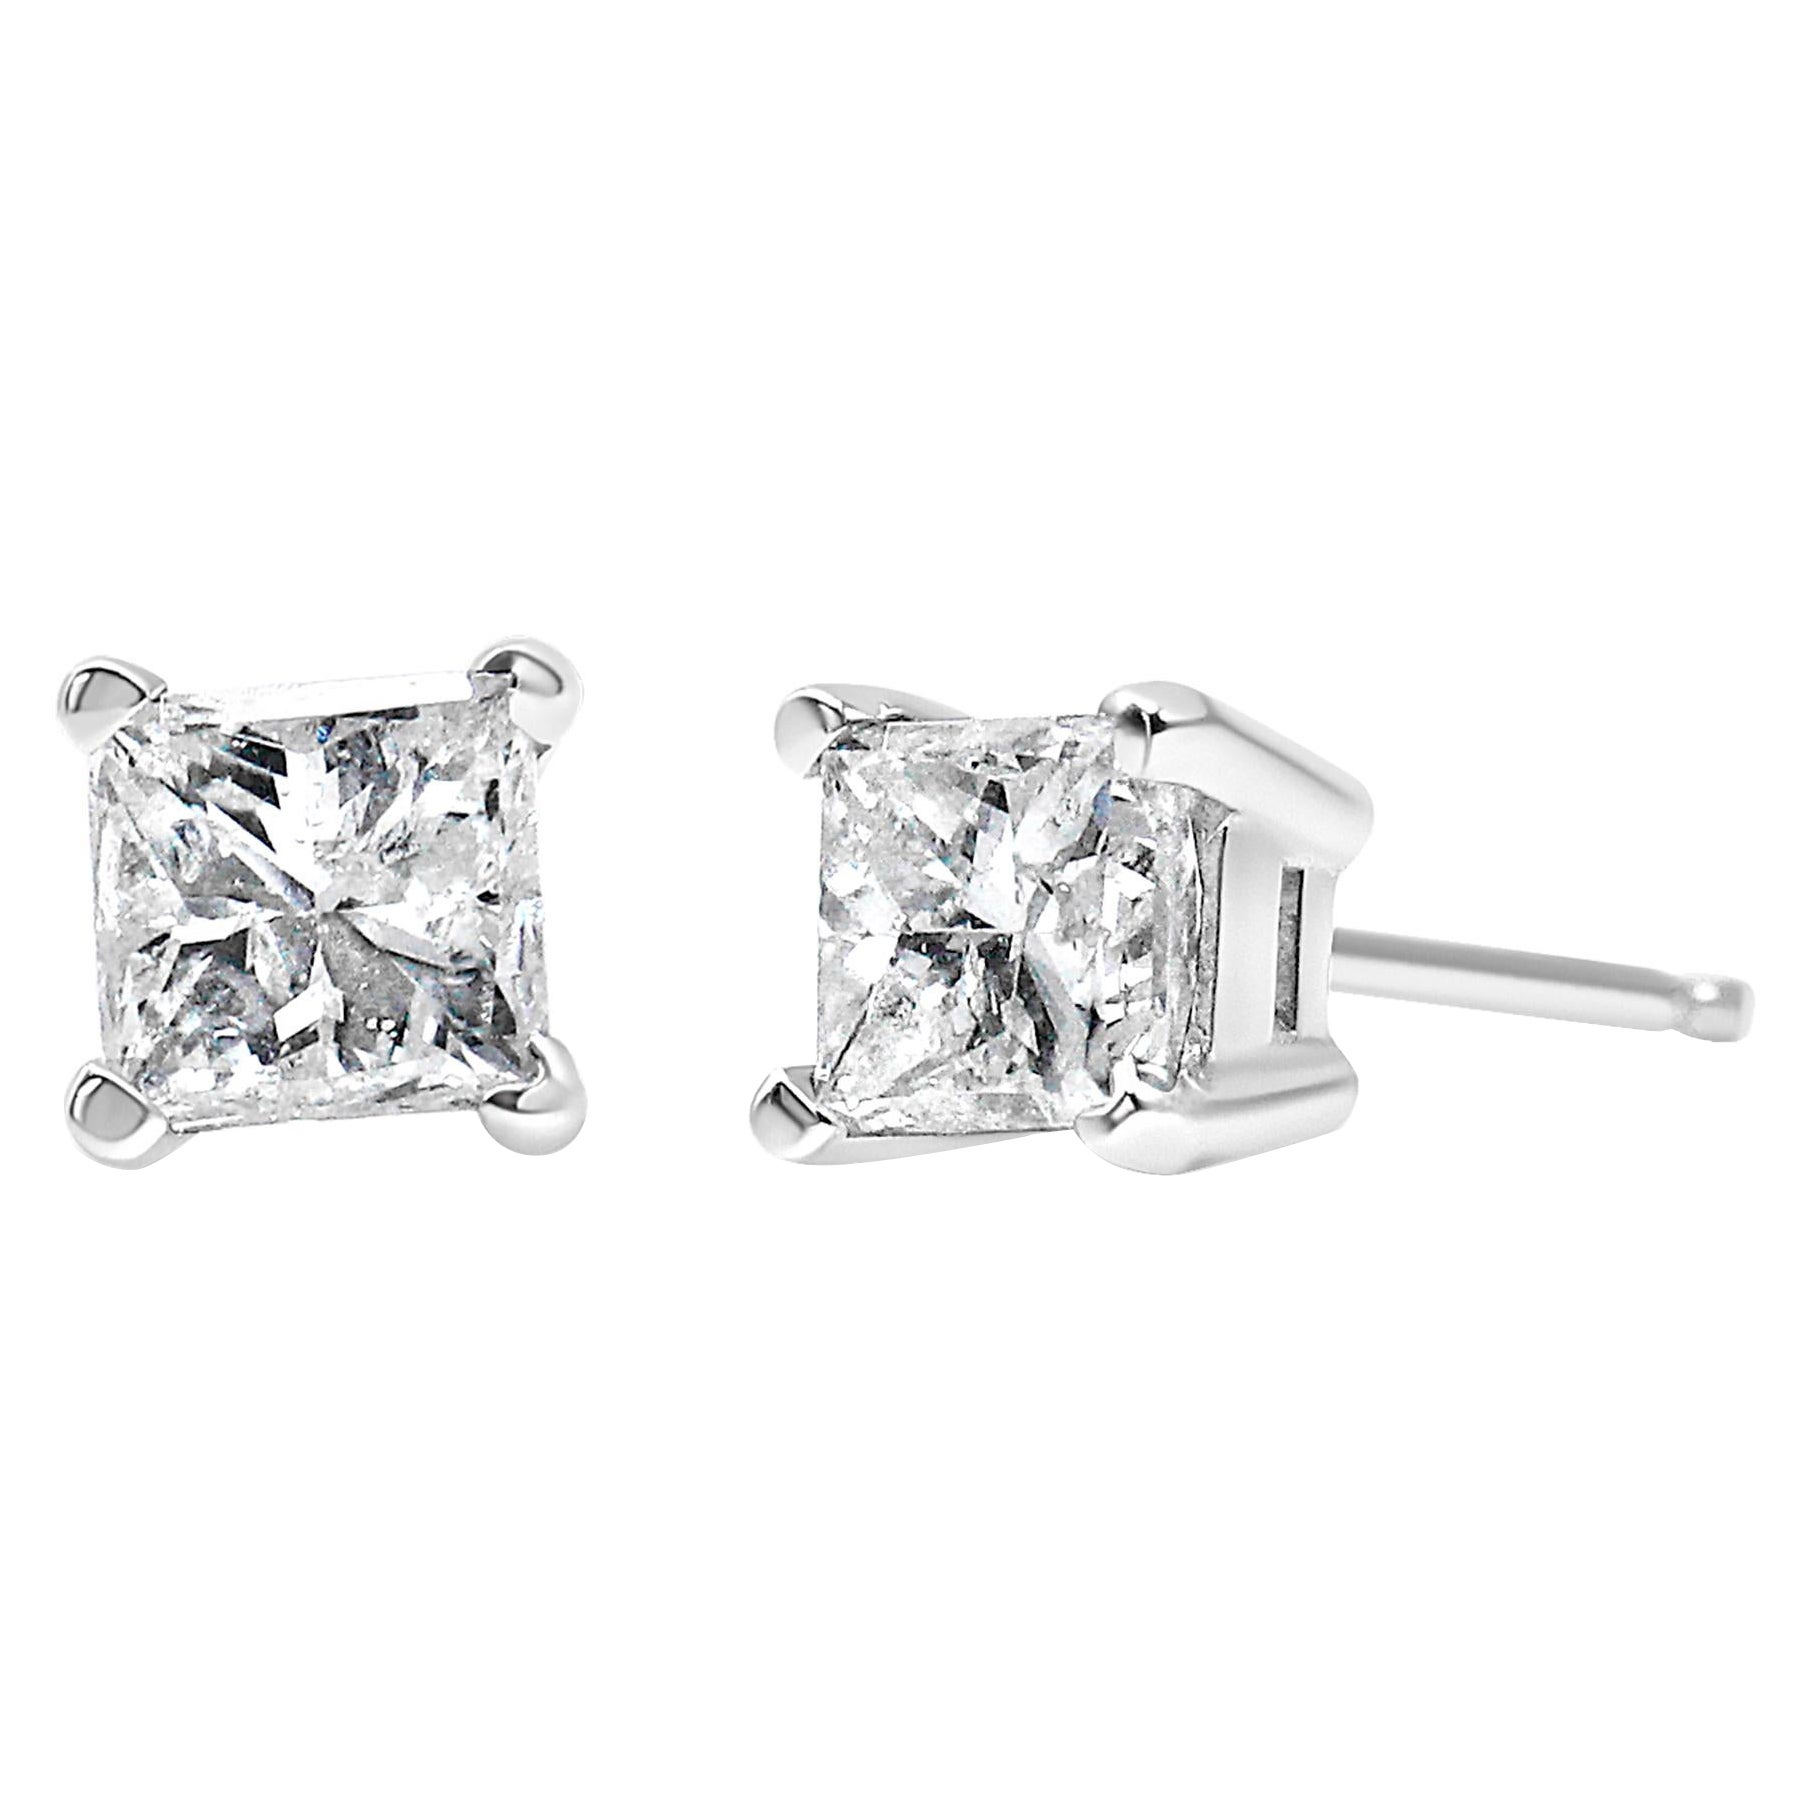 14K White Gold 1/2ct TDW Princess Cut Diamond Solitaire Stud Earrings